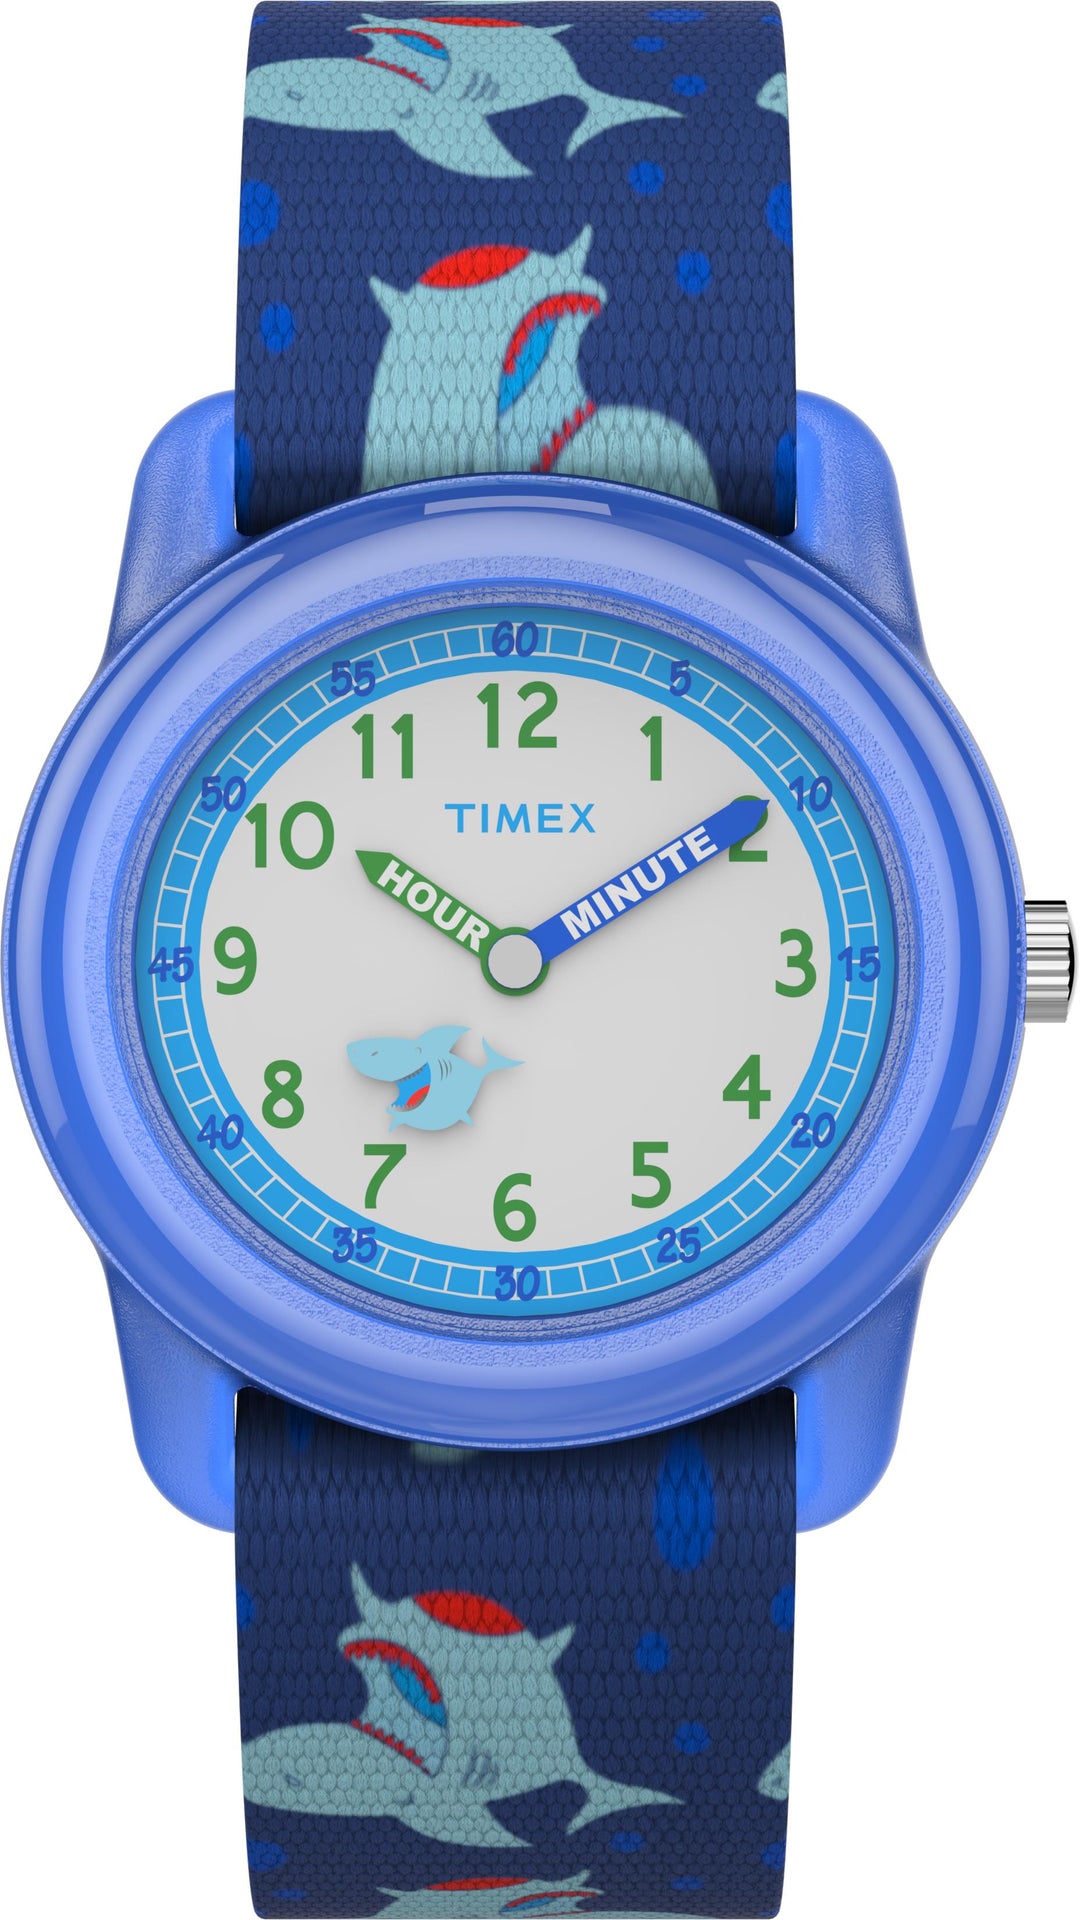 Timex Time Teacher Child's Watch